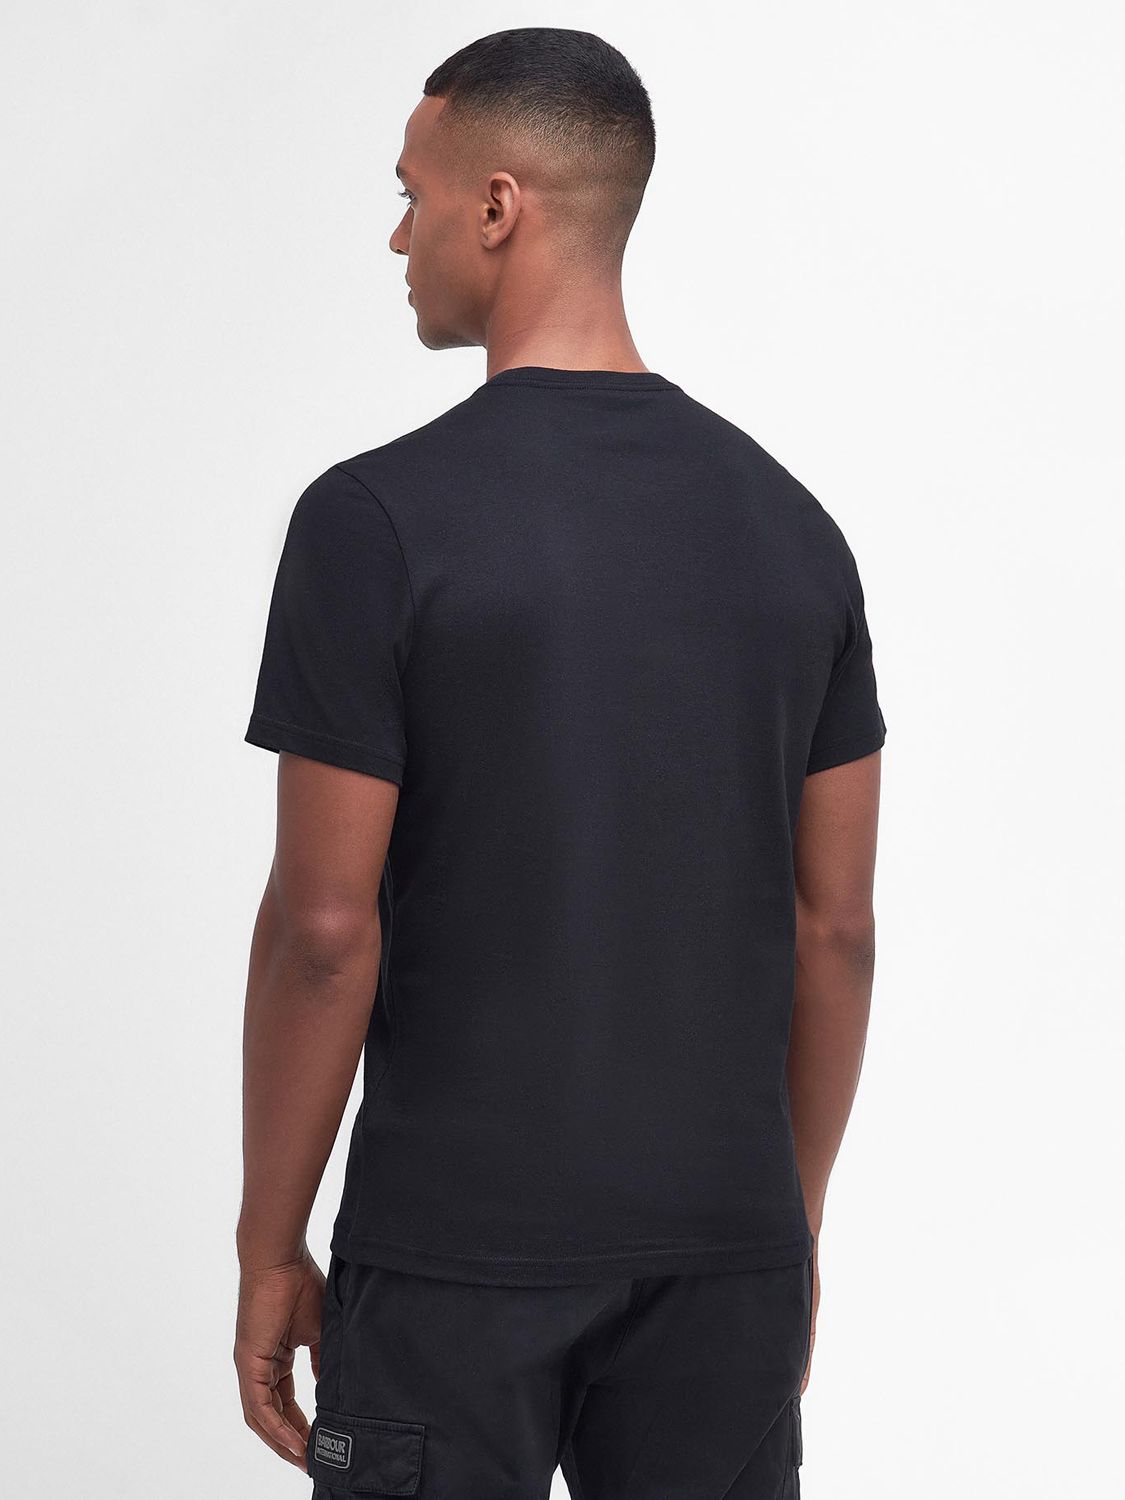 Barbour International Graphic T-Shirt, Black at John Lewis & Partners